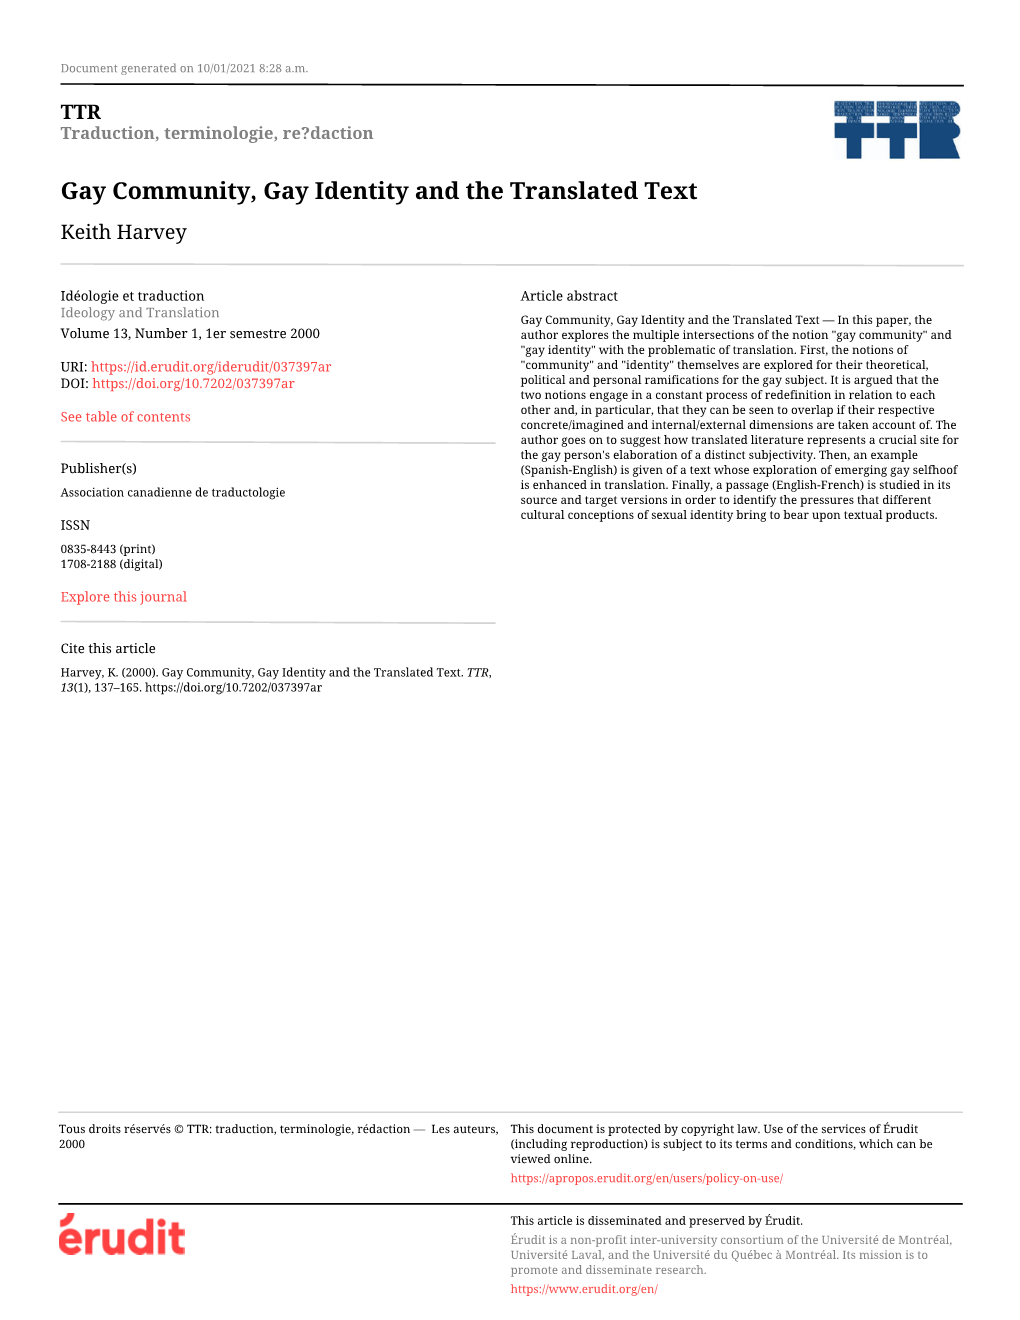 Gay Community, Gay Identity and the Translated Text Keith Harvey